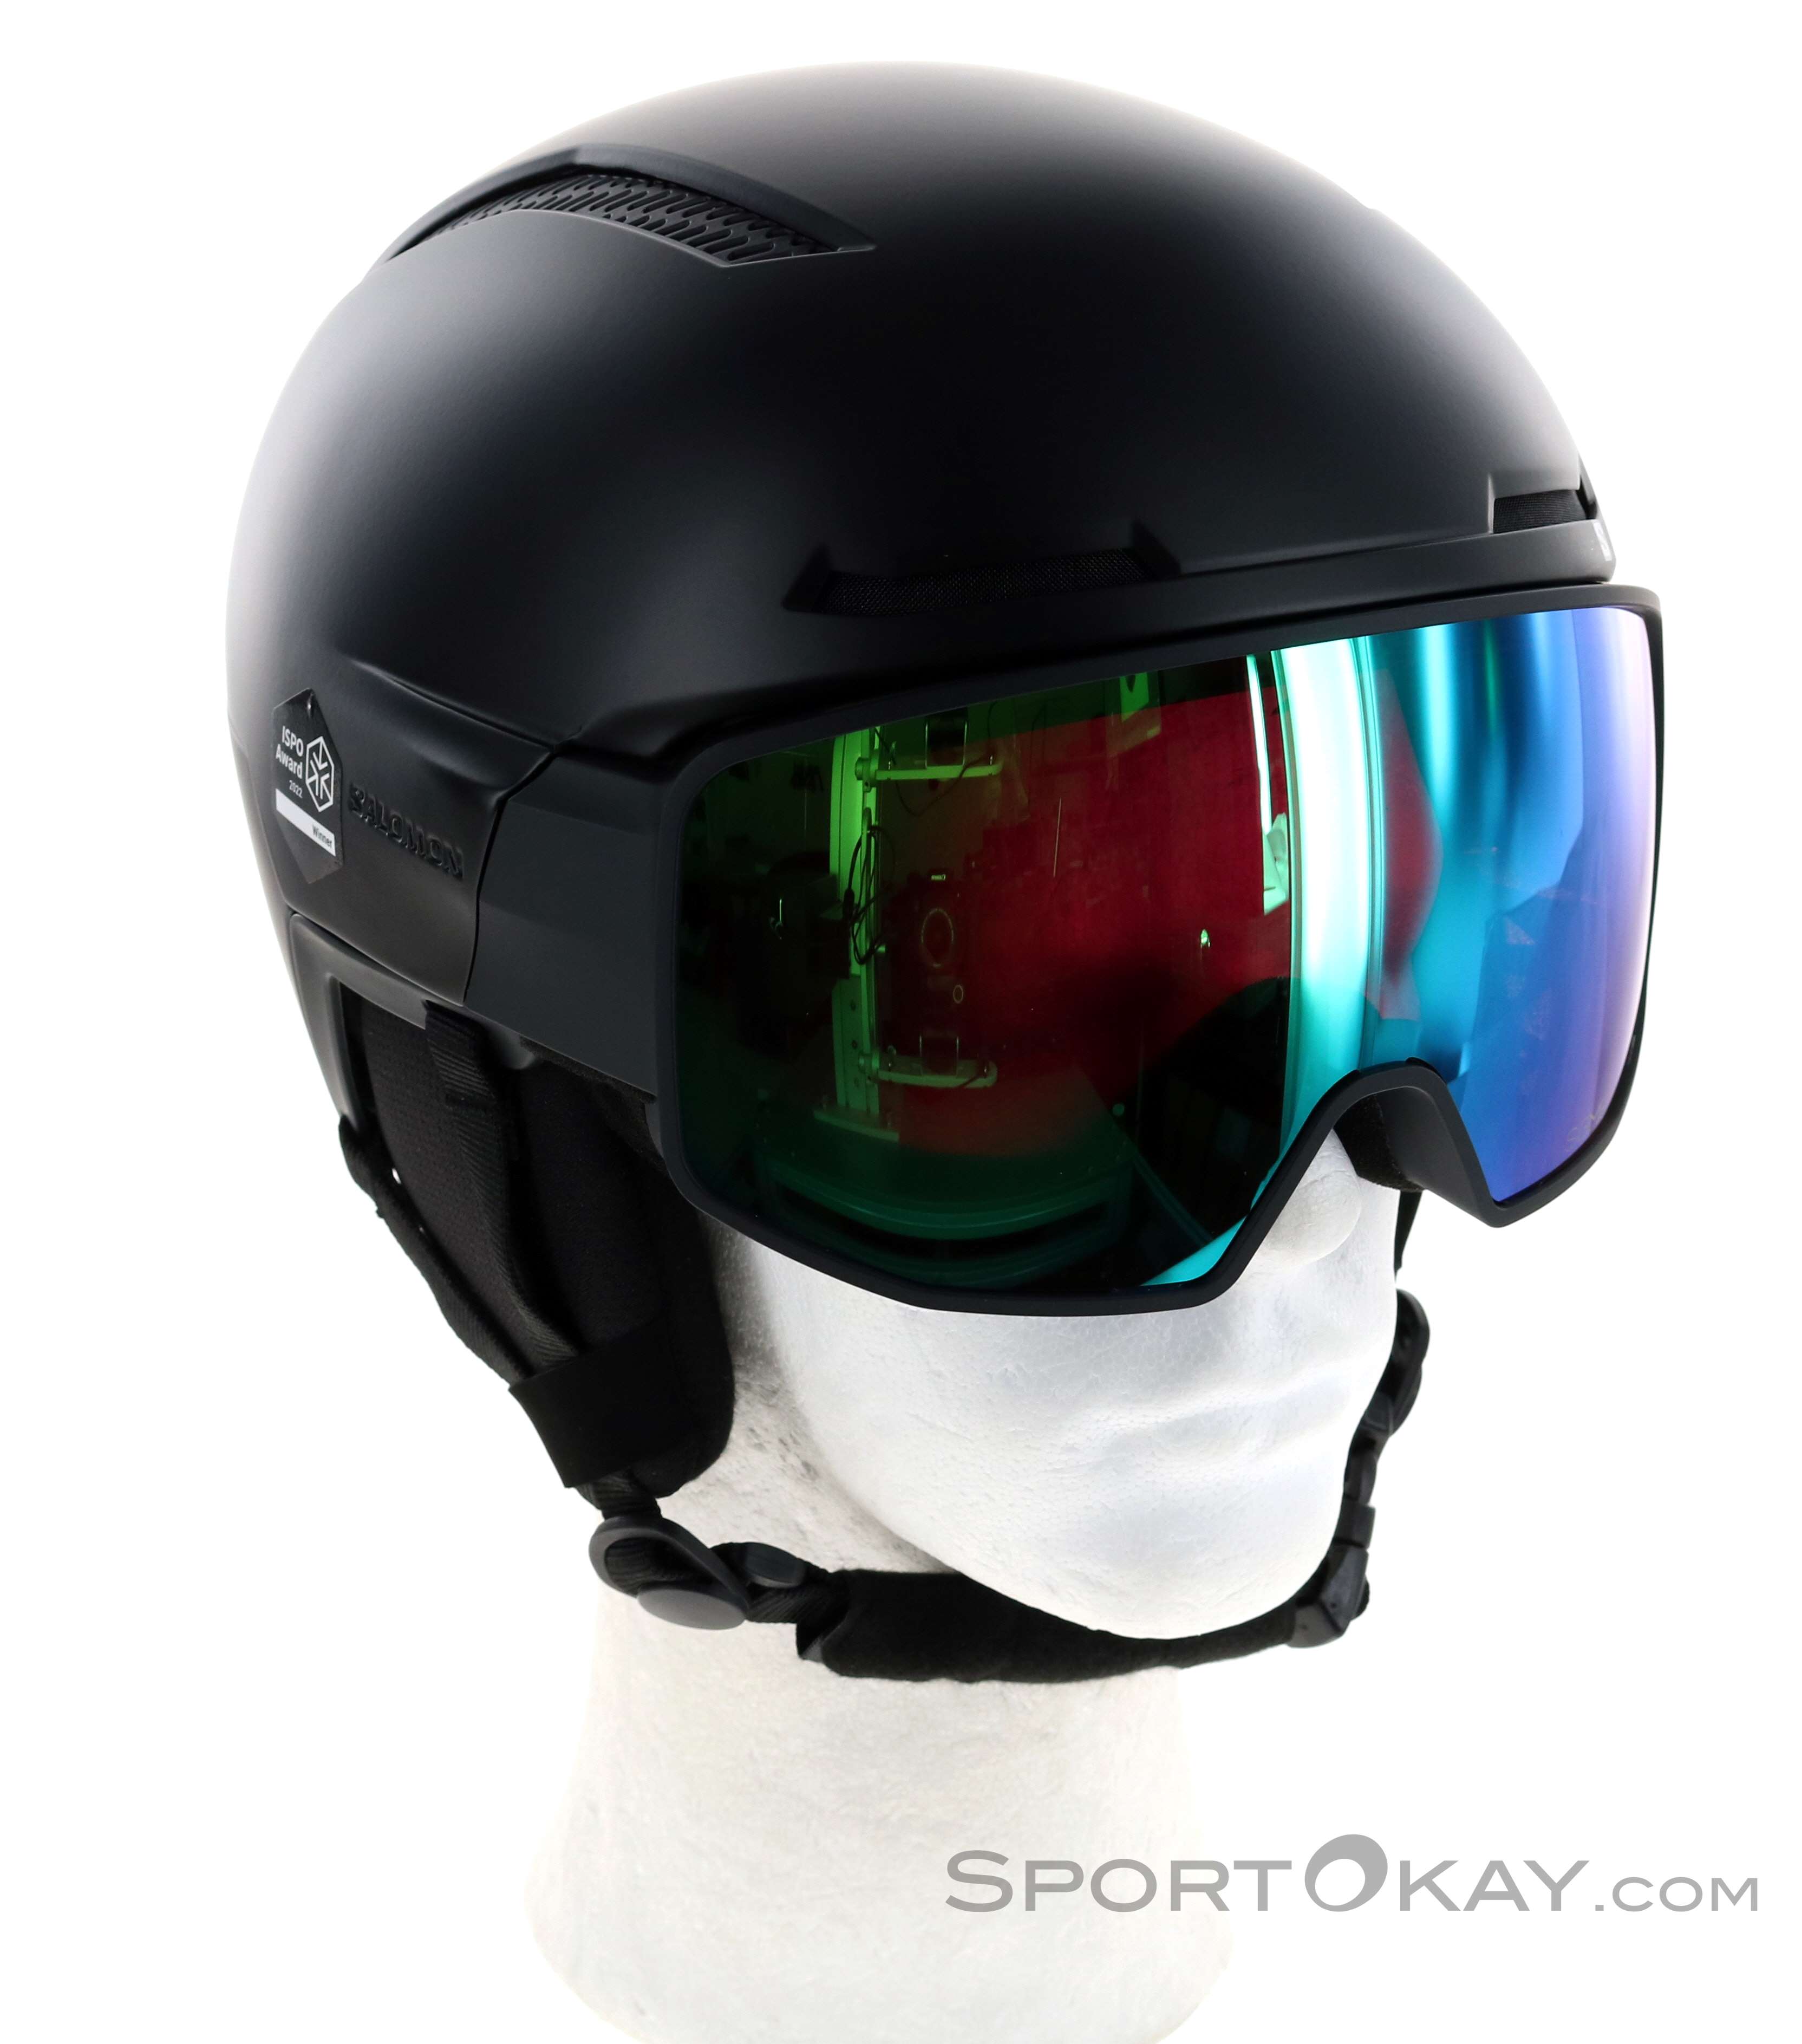 Driver Pro Sigma Mips - Unisex Helmet